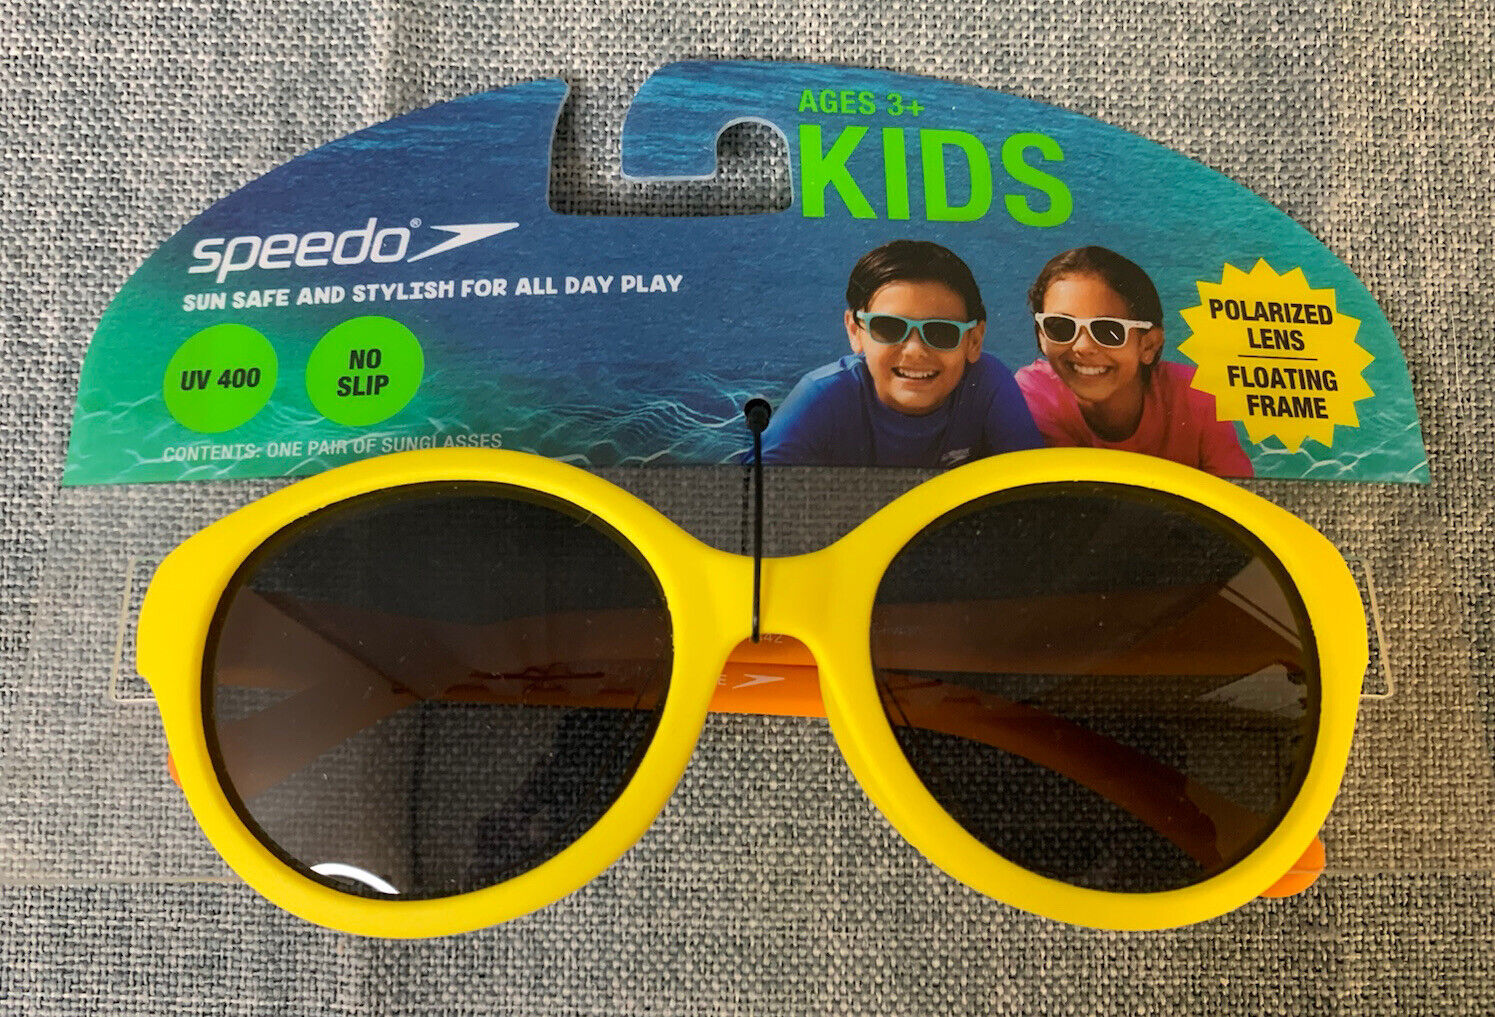 Speedo Kids' Polarized Shatter-Proof Sunglasses UV400 - Beach Buggy Yellow  and Blue/Smoke